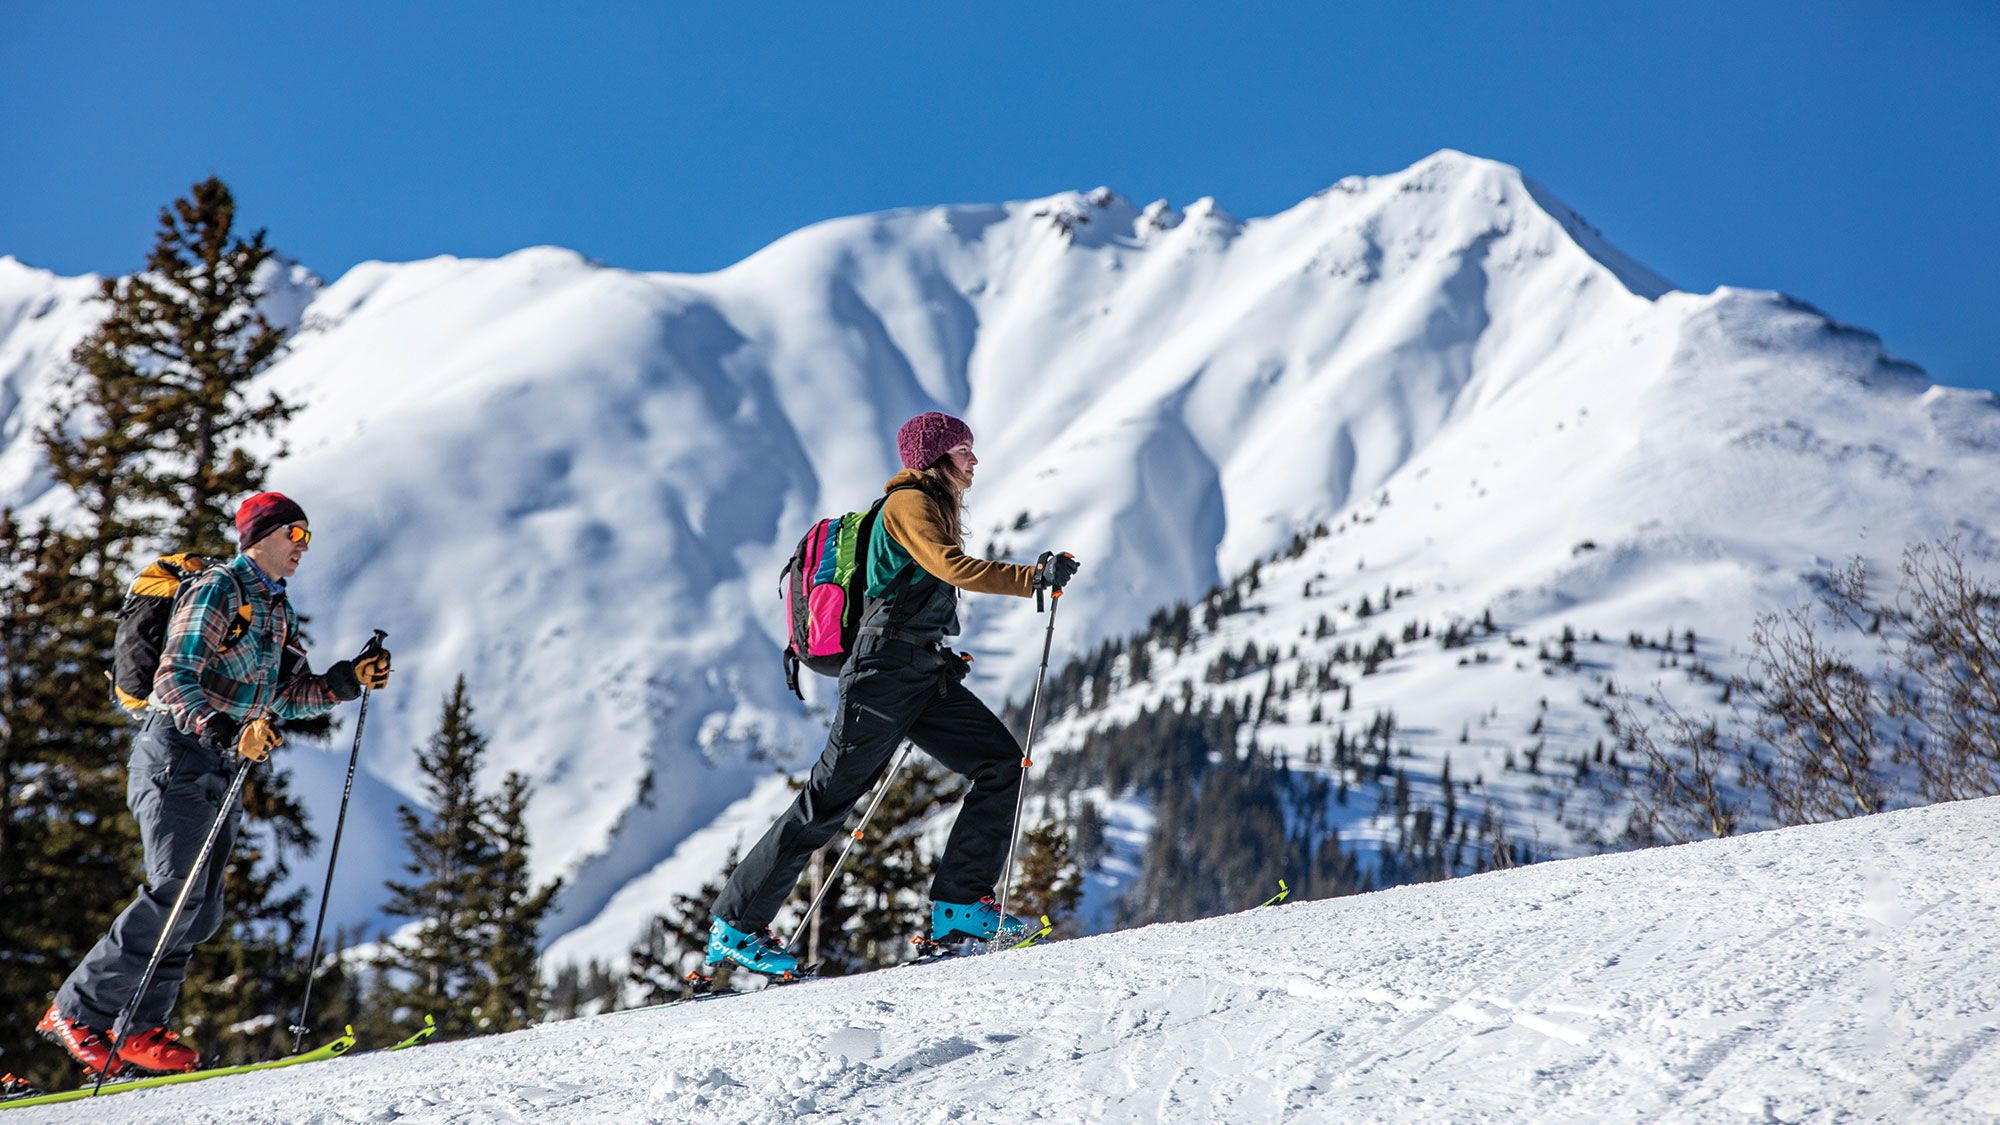 Uphill skiers at Aspen’s Snowmass resort. (Photo by Matt Power for Aspen Skiing Co.)